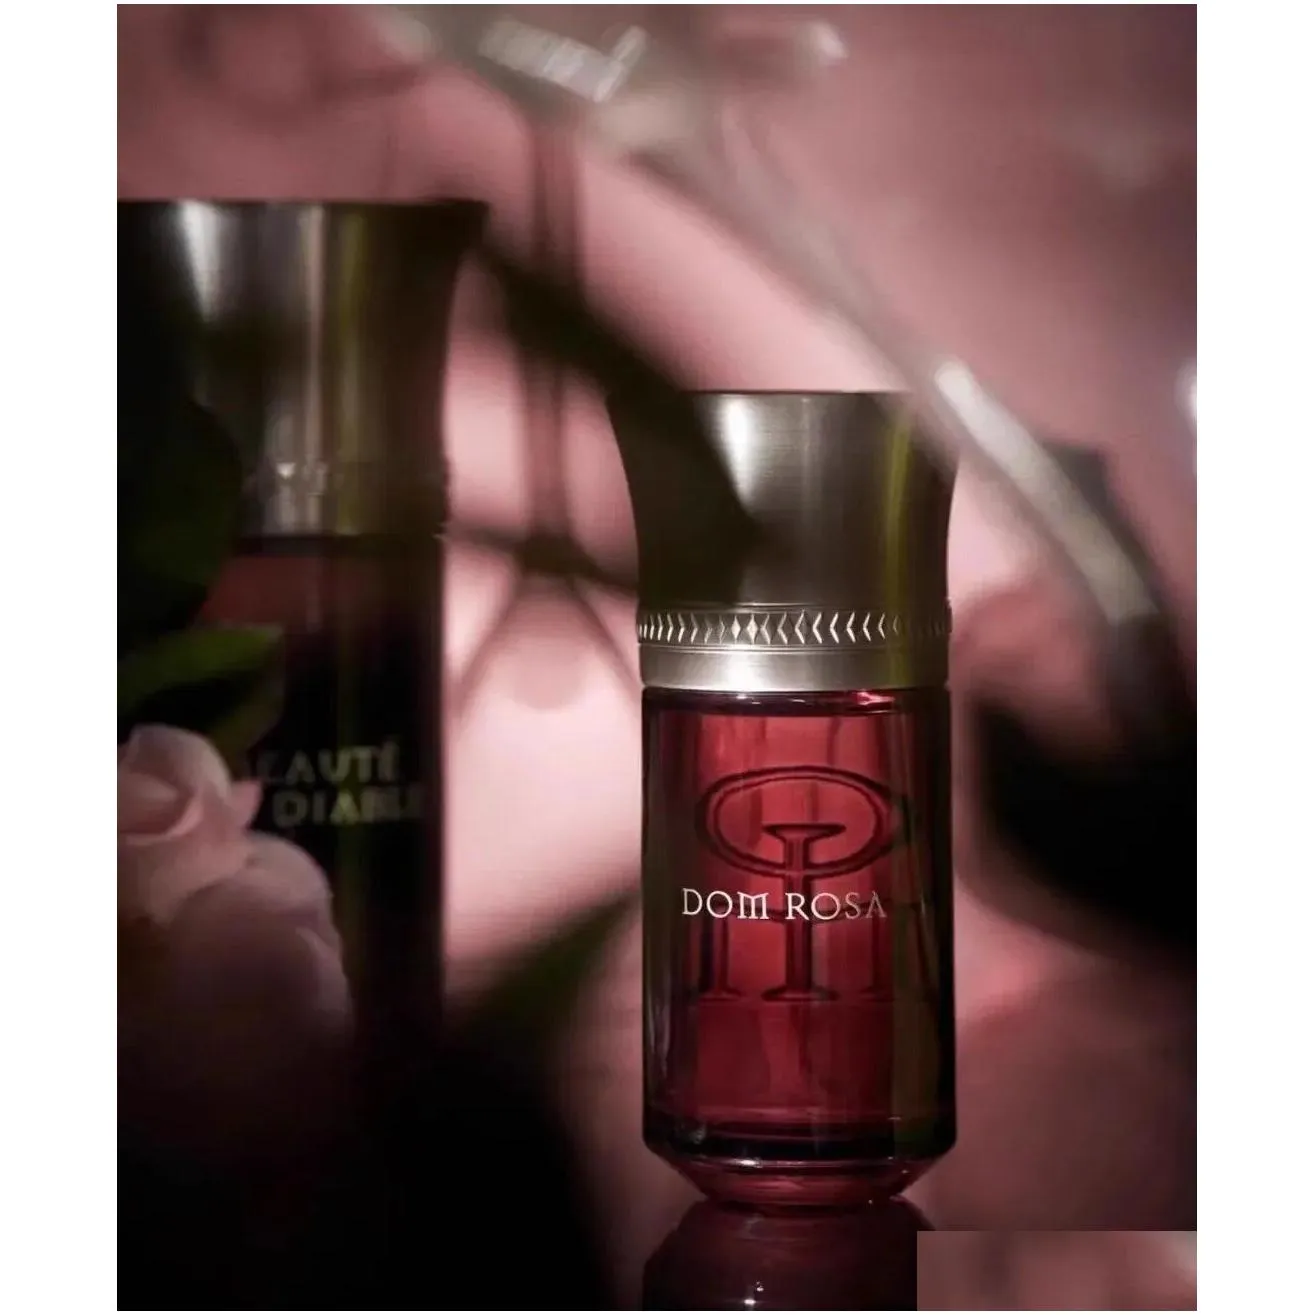 Blanche Bete Liquides Imaginaires Dom Rose Bete Humaine Fragrance Fleur De Sable 100ml for Spray Long lasting Perfume fast ship